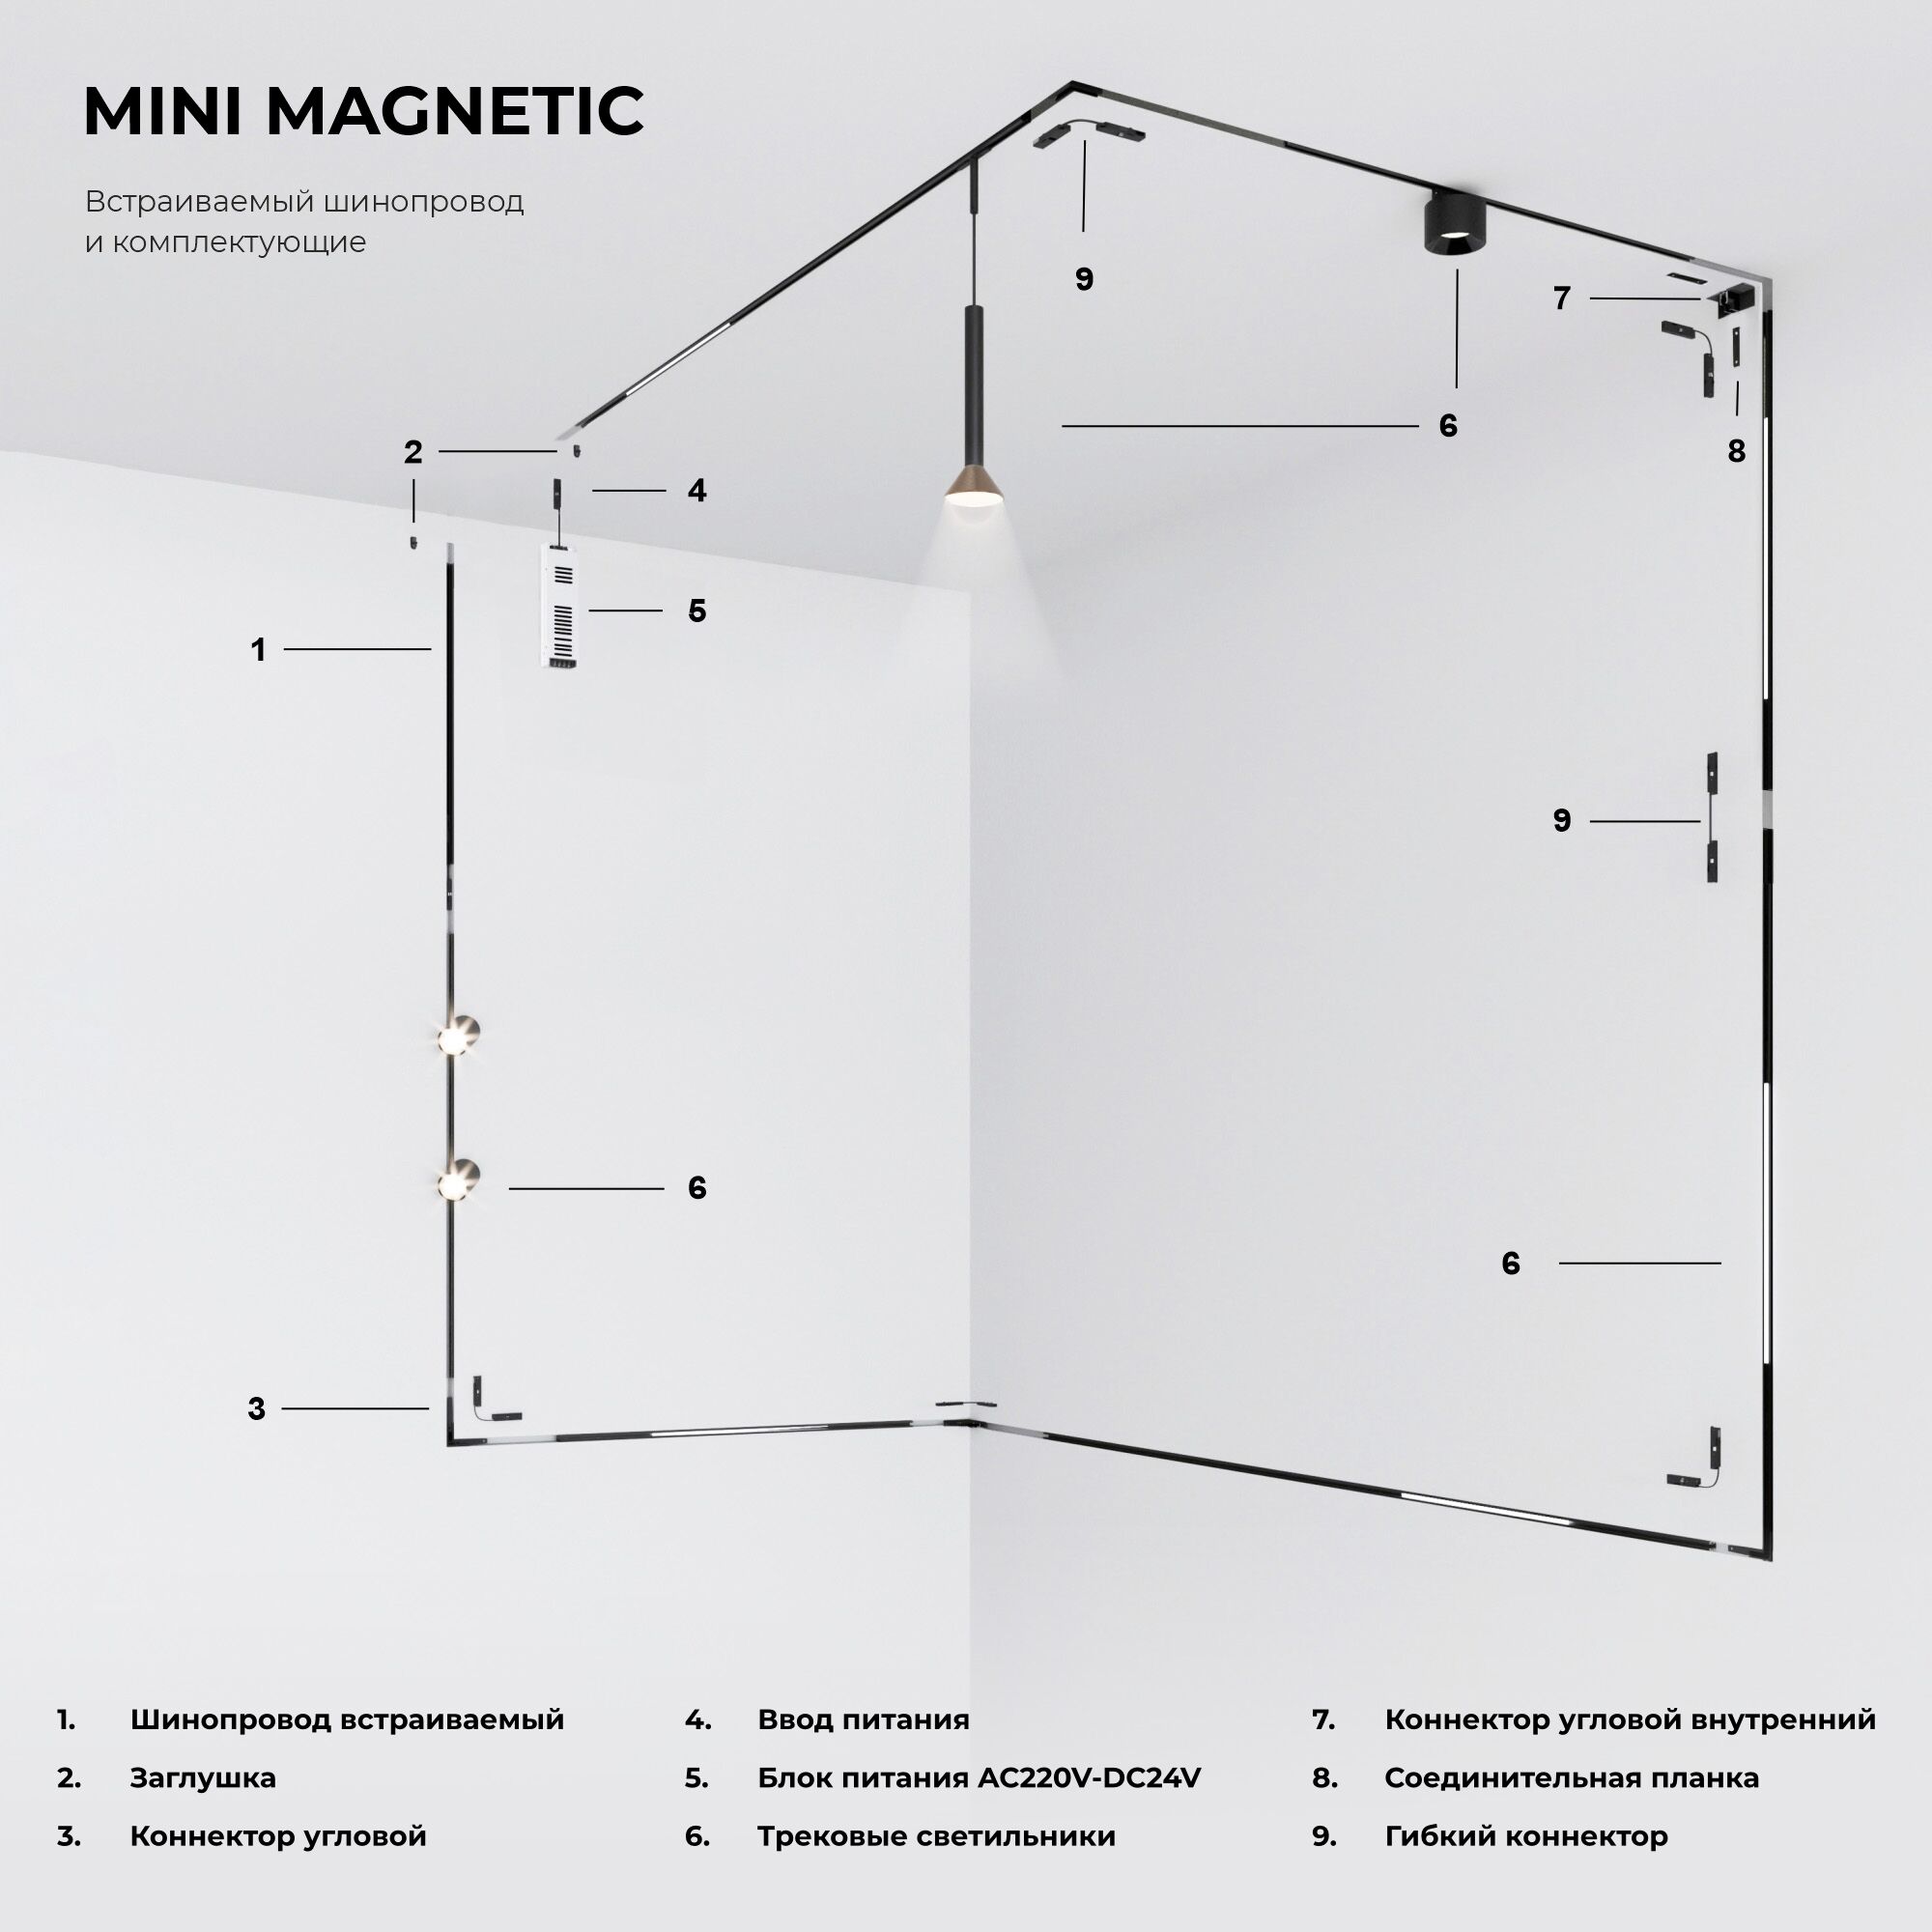 Mini Magnetic Гибкий коннектор (черный) 85173/00